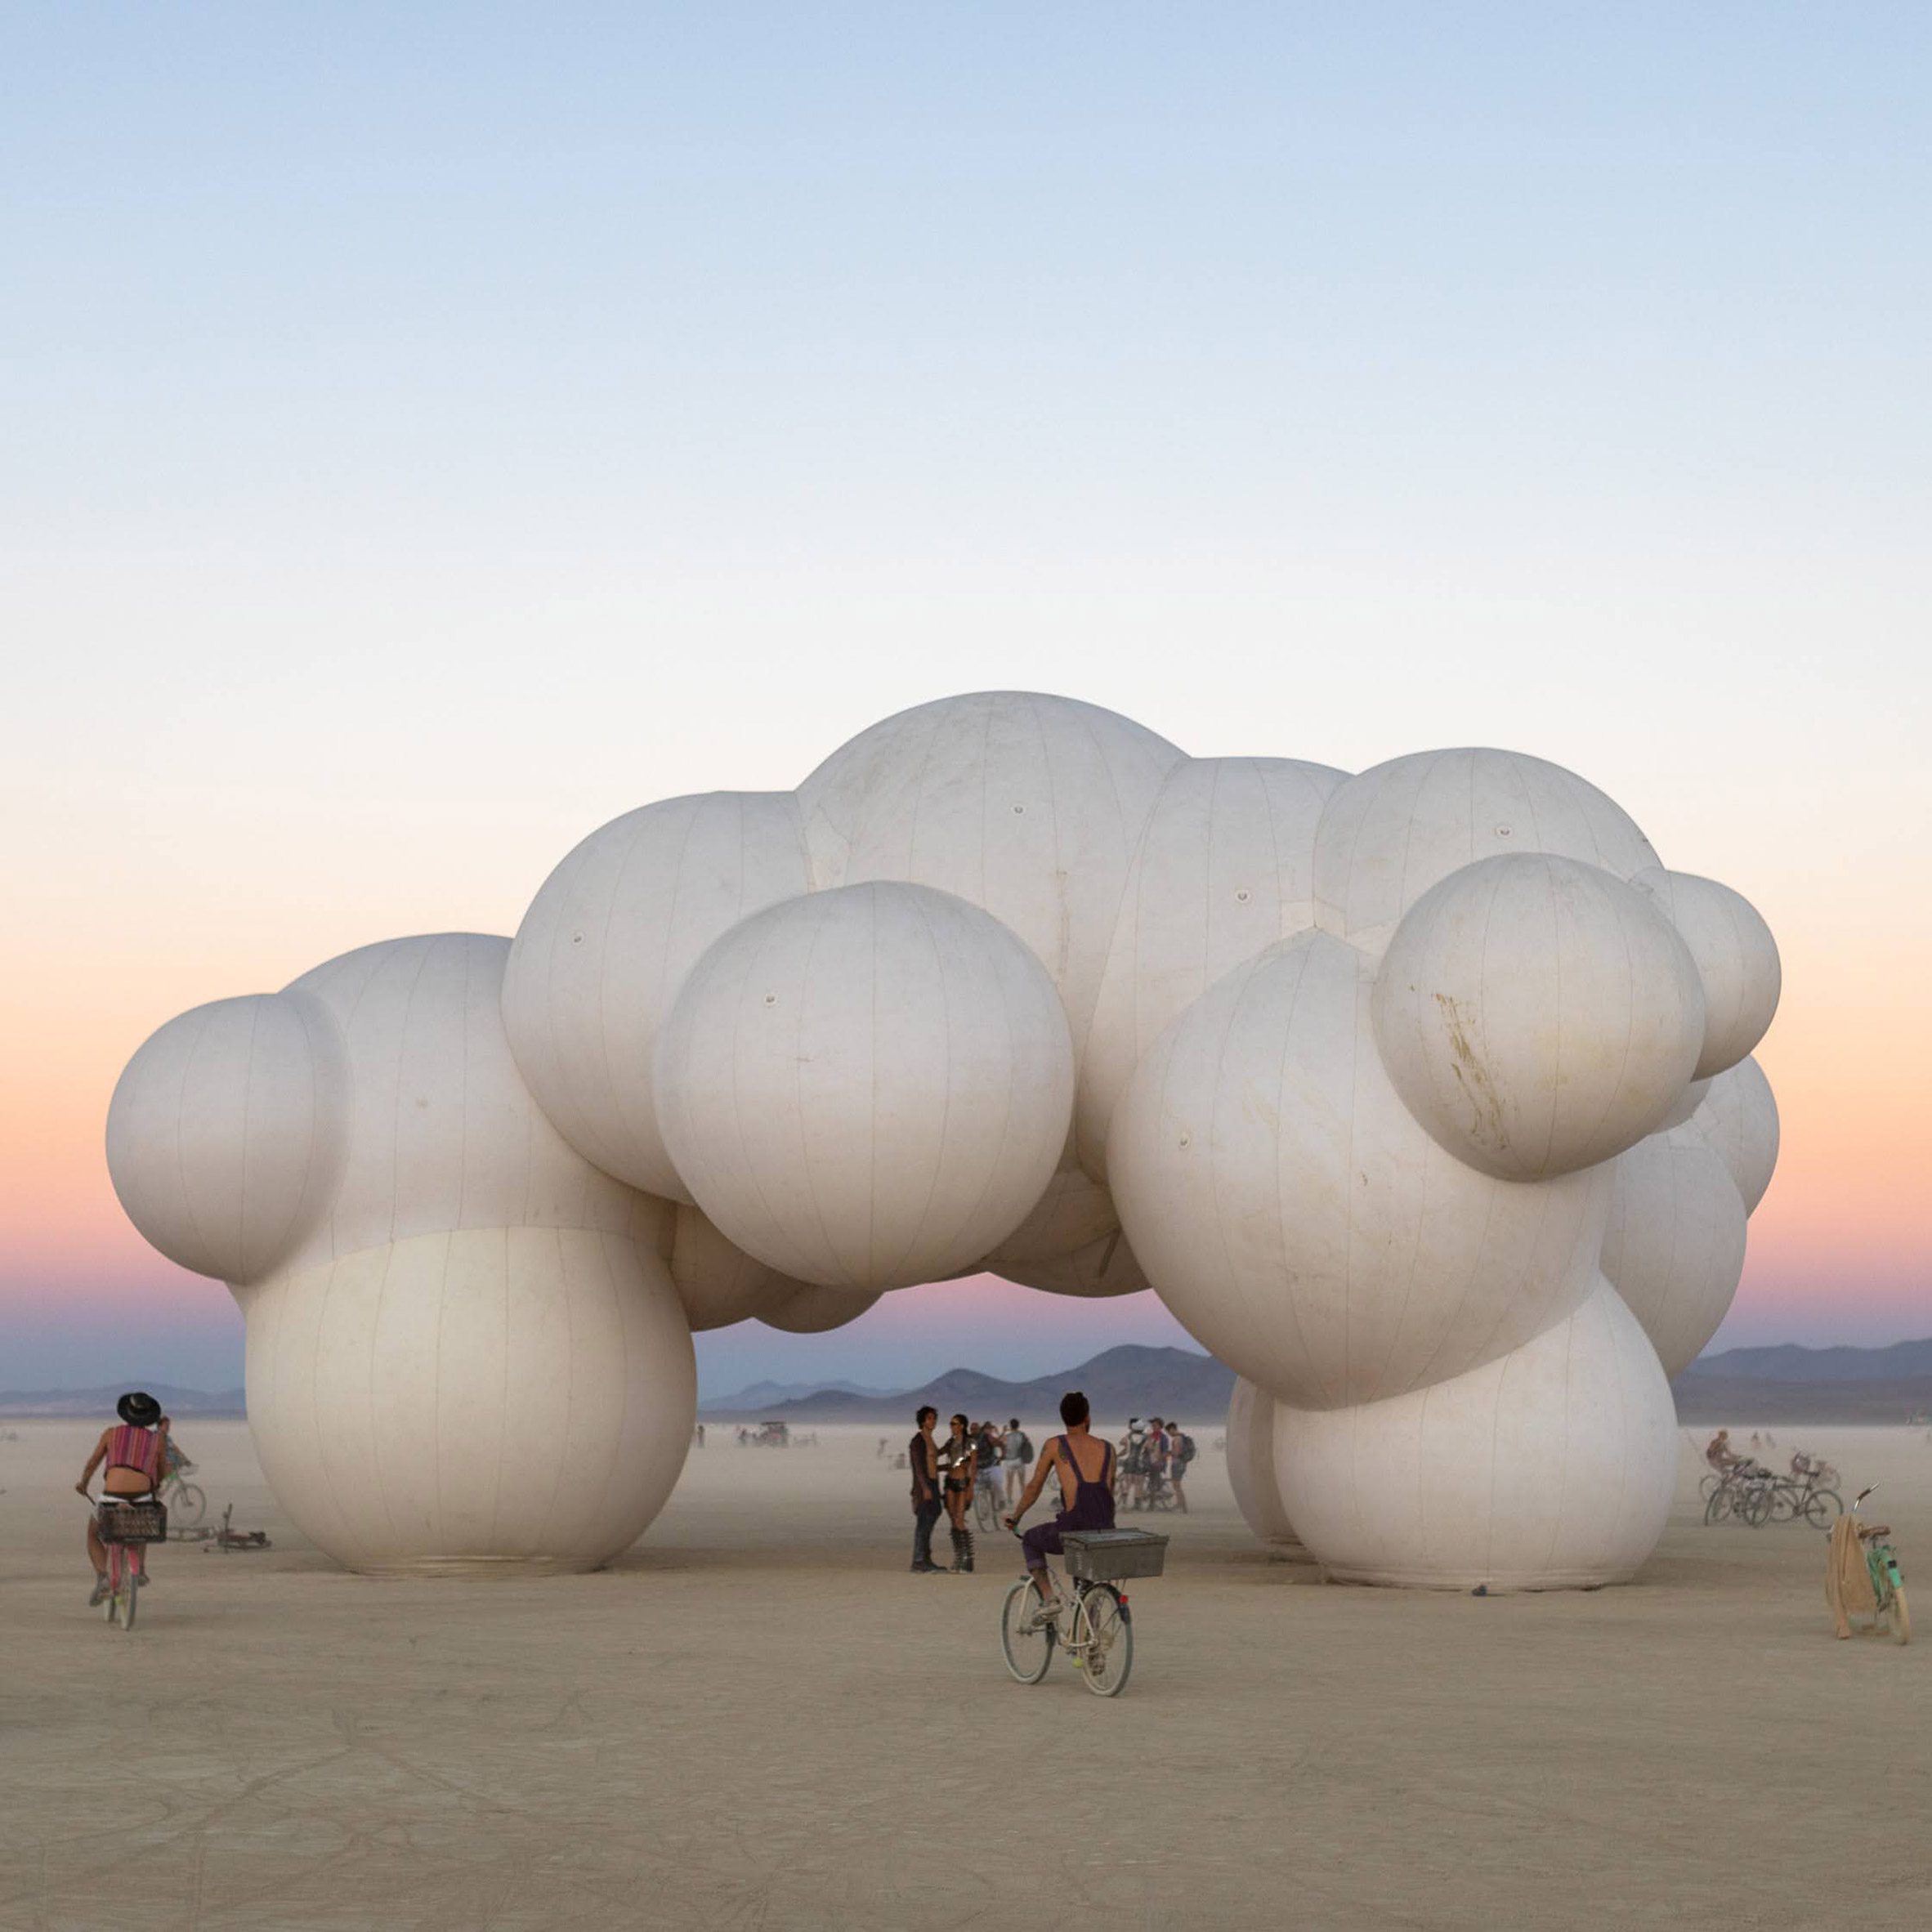 Inflatable installation by Bjarke Ingels and Jakob Lange for Burning Man festival, USA, 2022